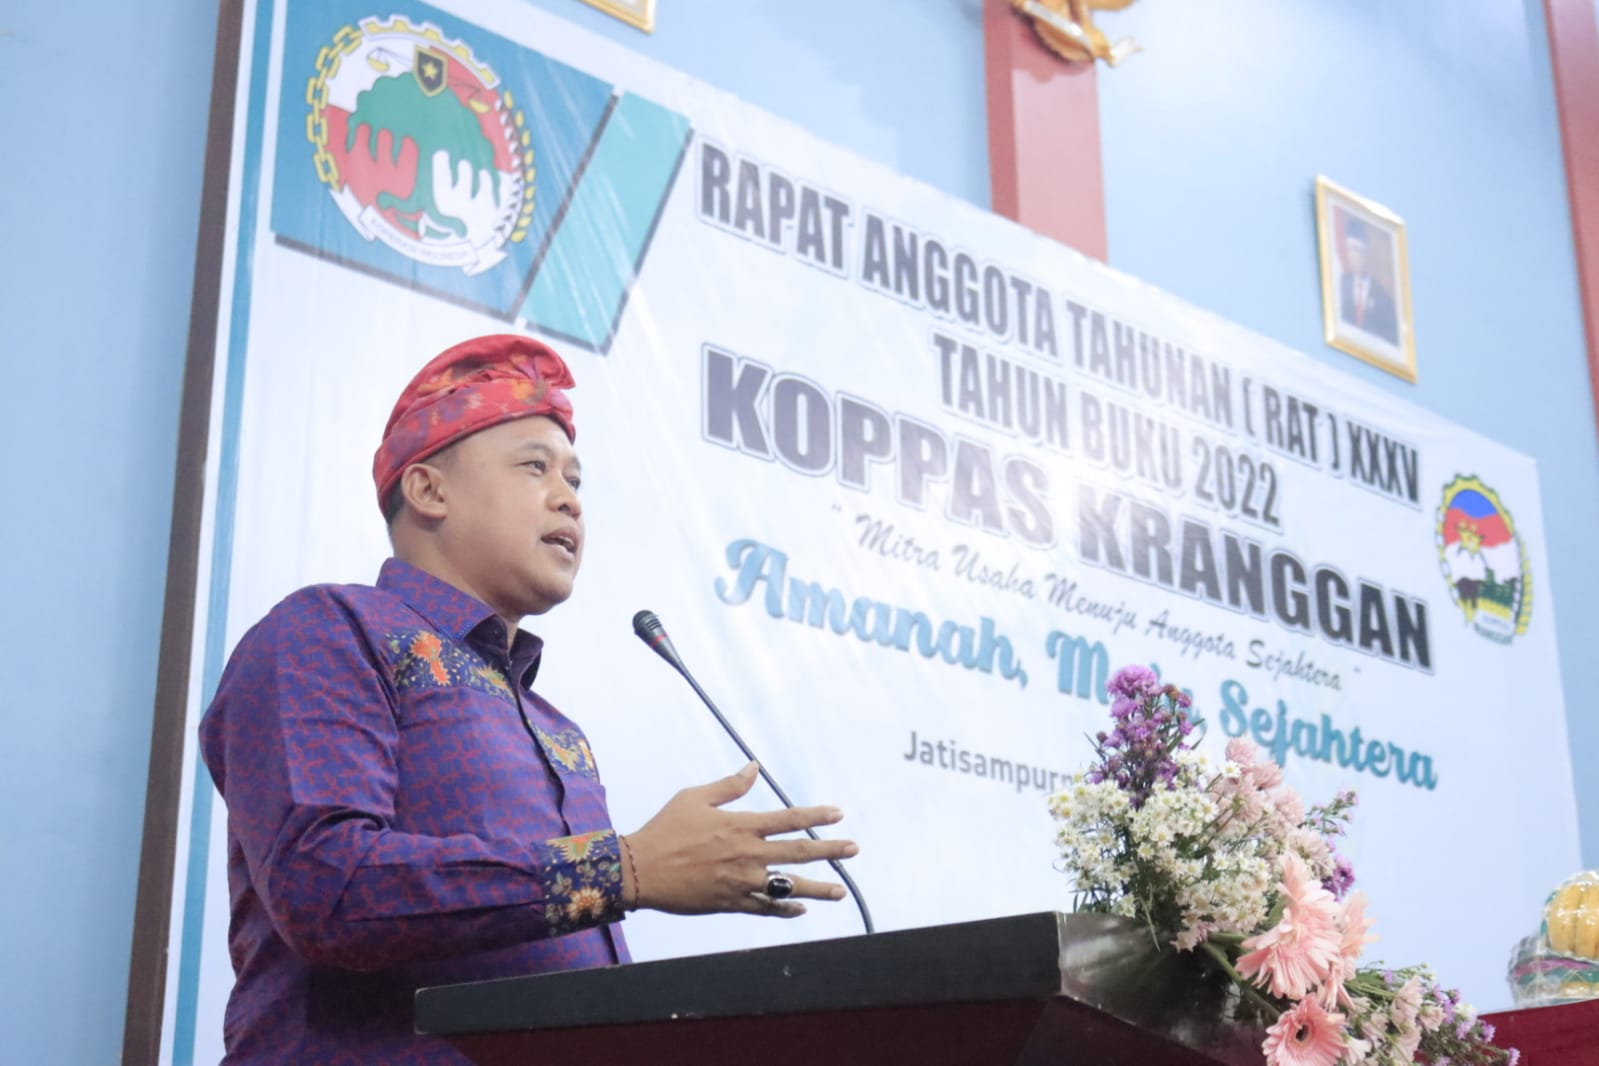 Plt Wali Kota Bekasi Tri Adhianto Saat Sambutan RAT KSP Koppas Kranggan ke XXXV